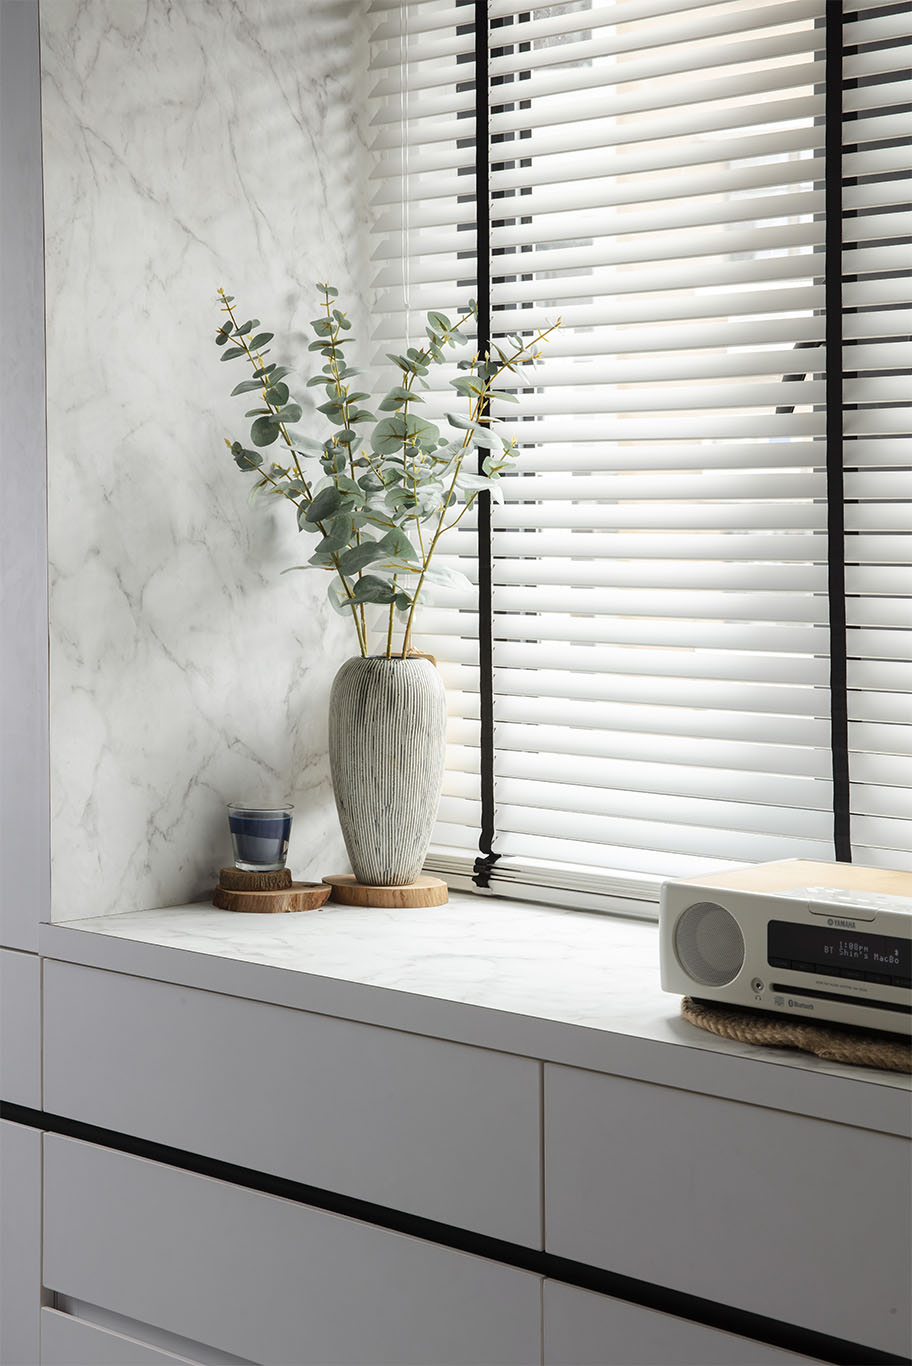 Minimalist decoration with minimalist white window blinds, white cabinet with white marble, white retro radio, and dusty green leaves decoration with minimalist vase